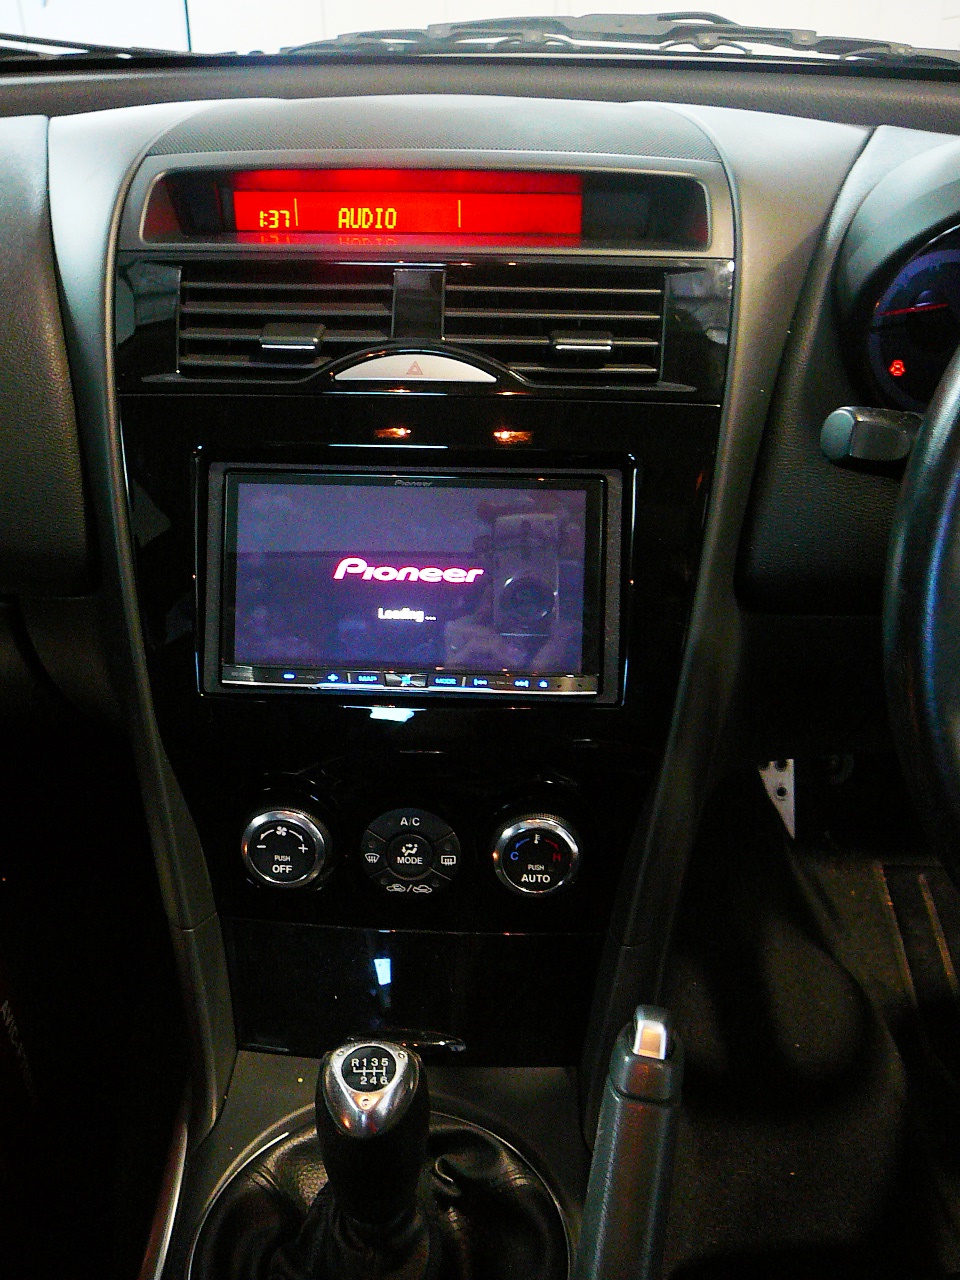 Mazda RX-8, Pioneer AVH-P8750BT Apple Car Play Unit & Gloss Black Dash Fascia